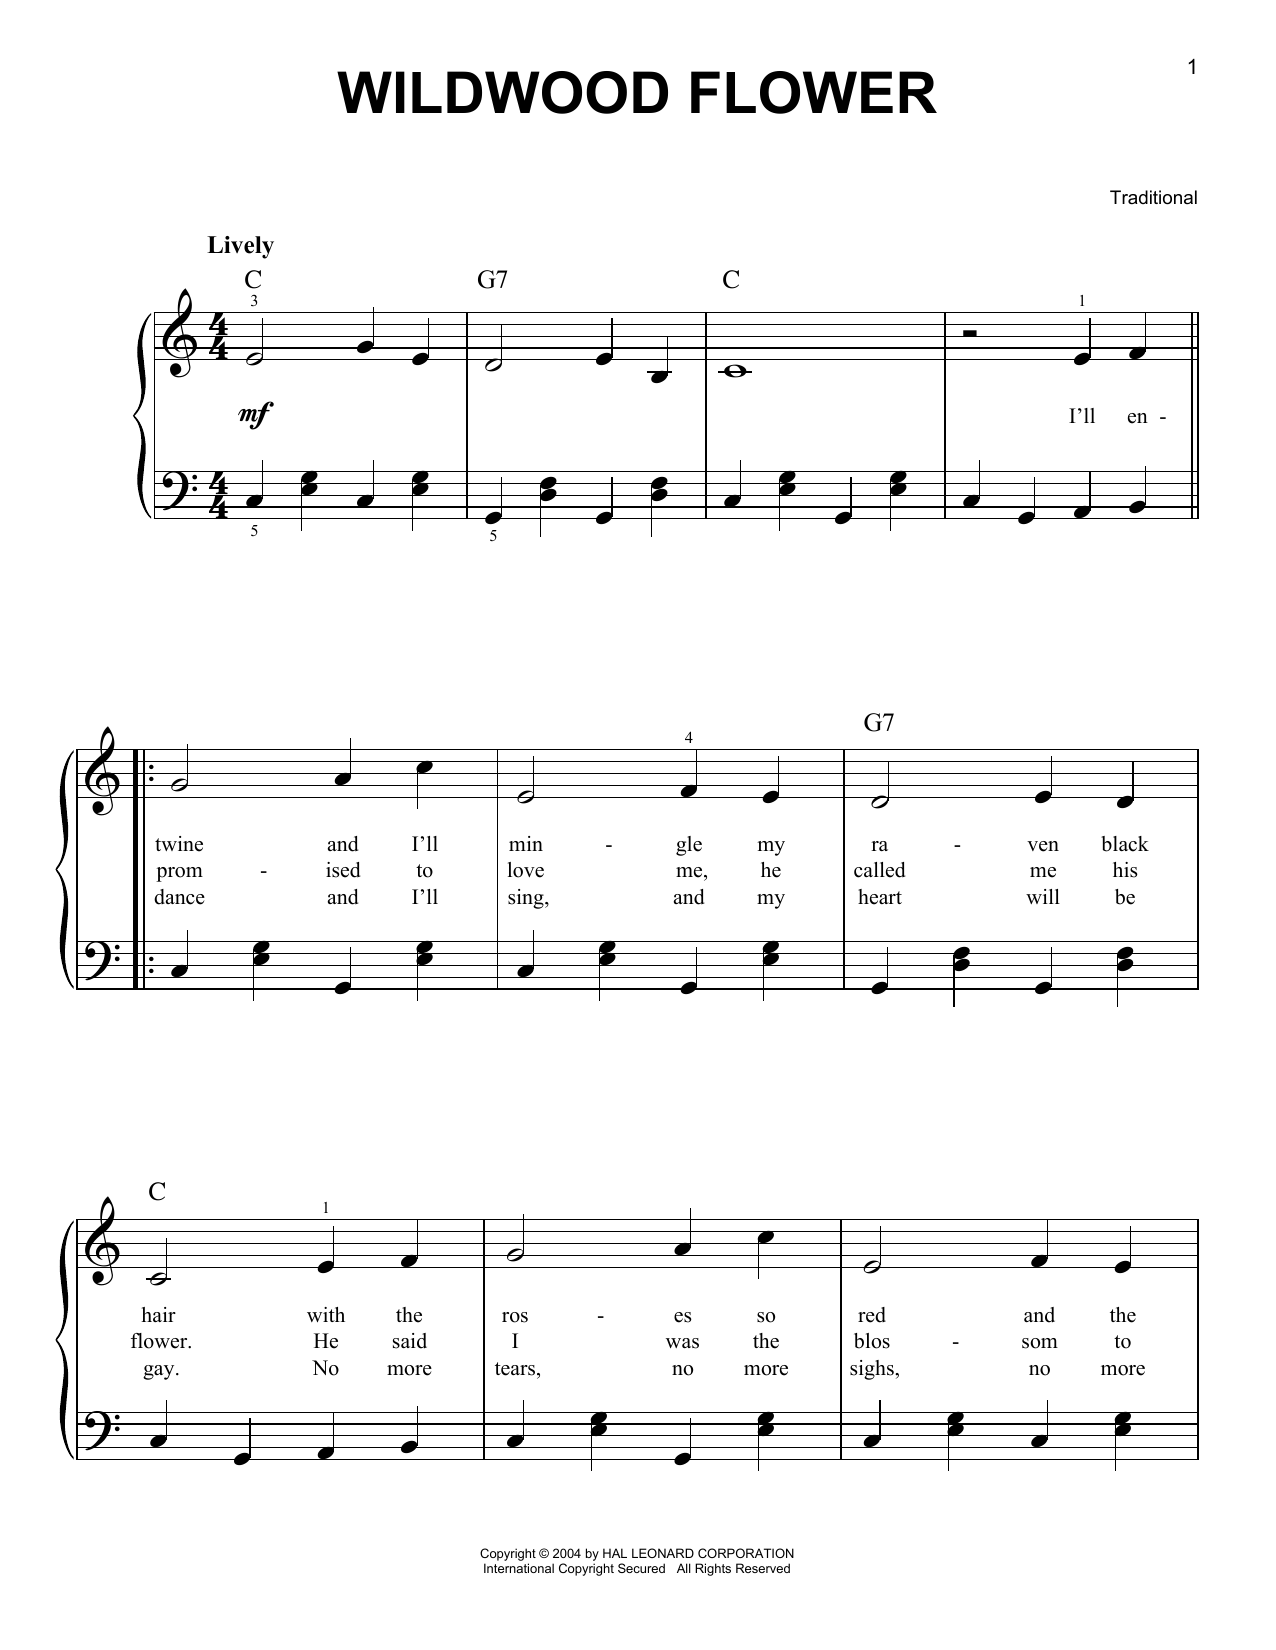 Traditional Wildwood Flower Sheet Music Notes & Chords for Banjo Tab - Download or Print PDF